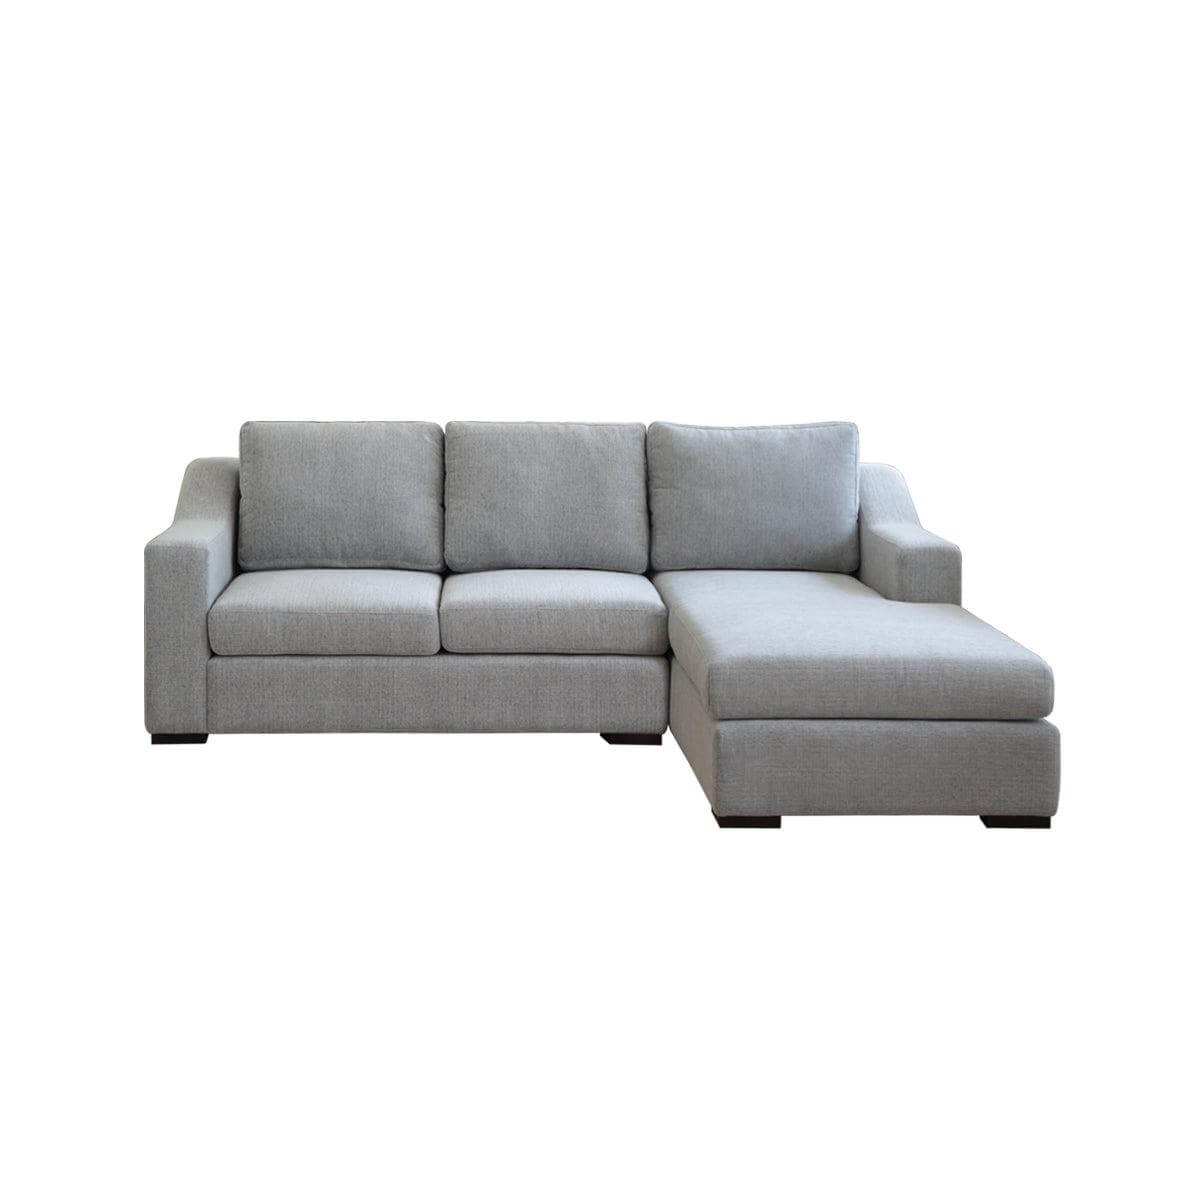 Presidio l shape two seat sofa with prestigious accent arm furniture